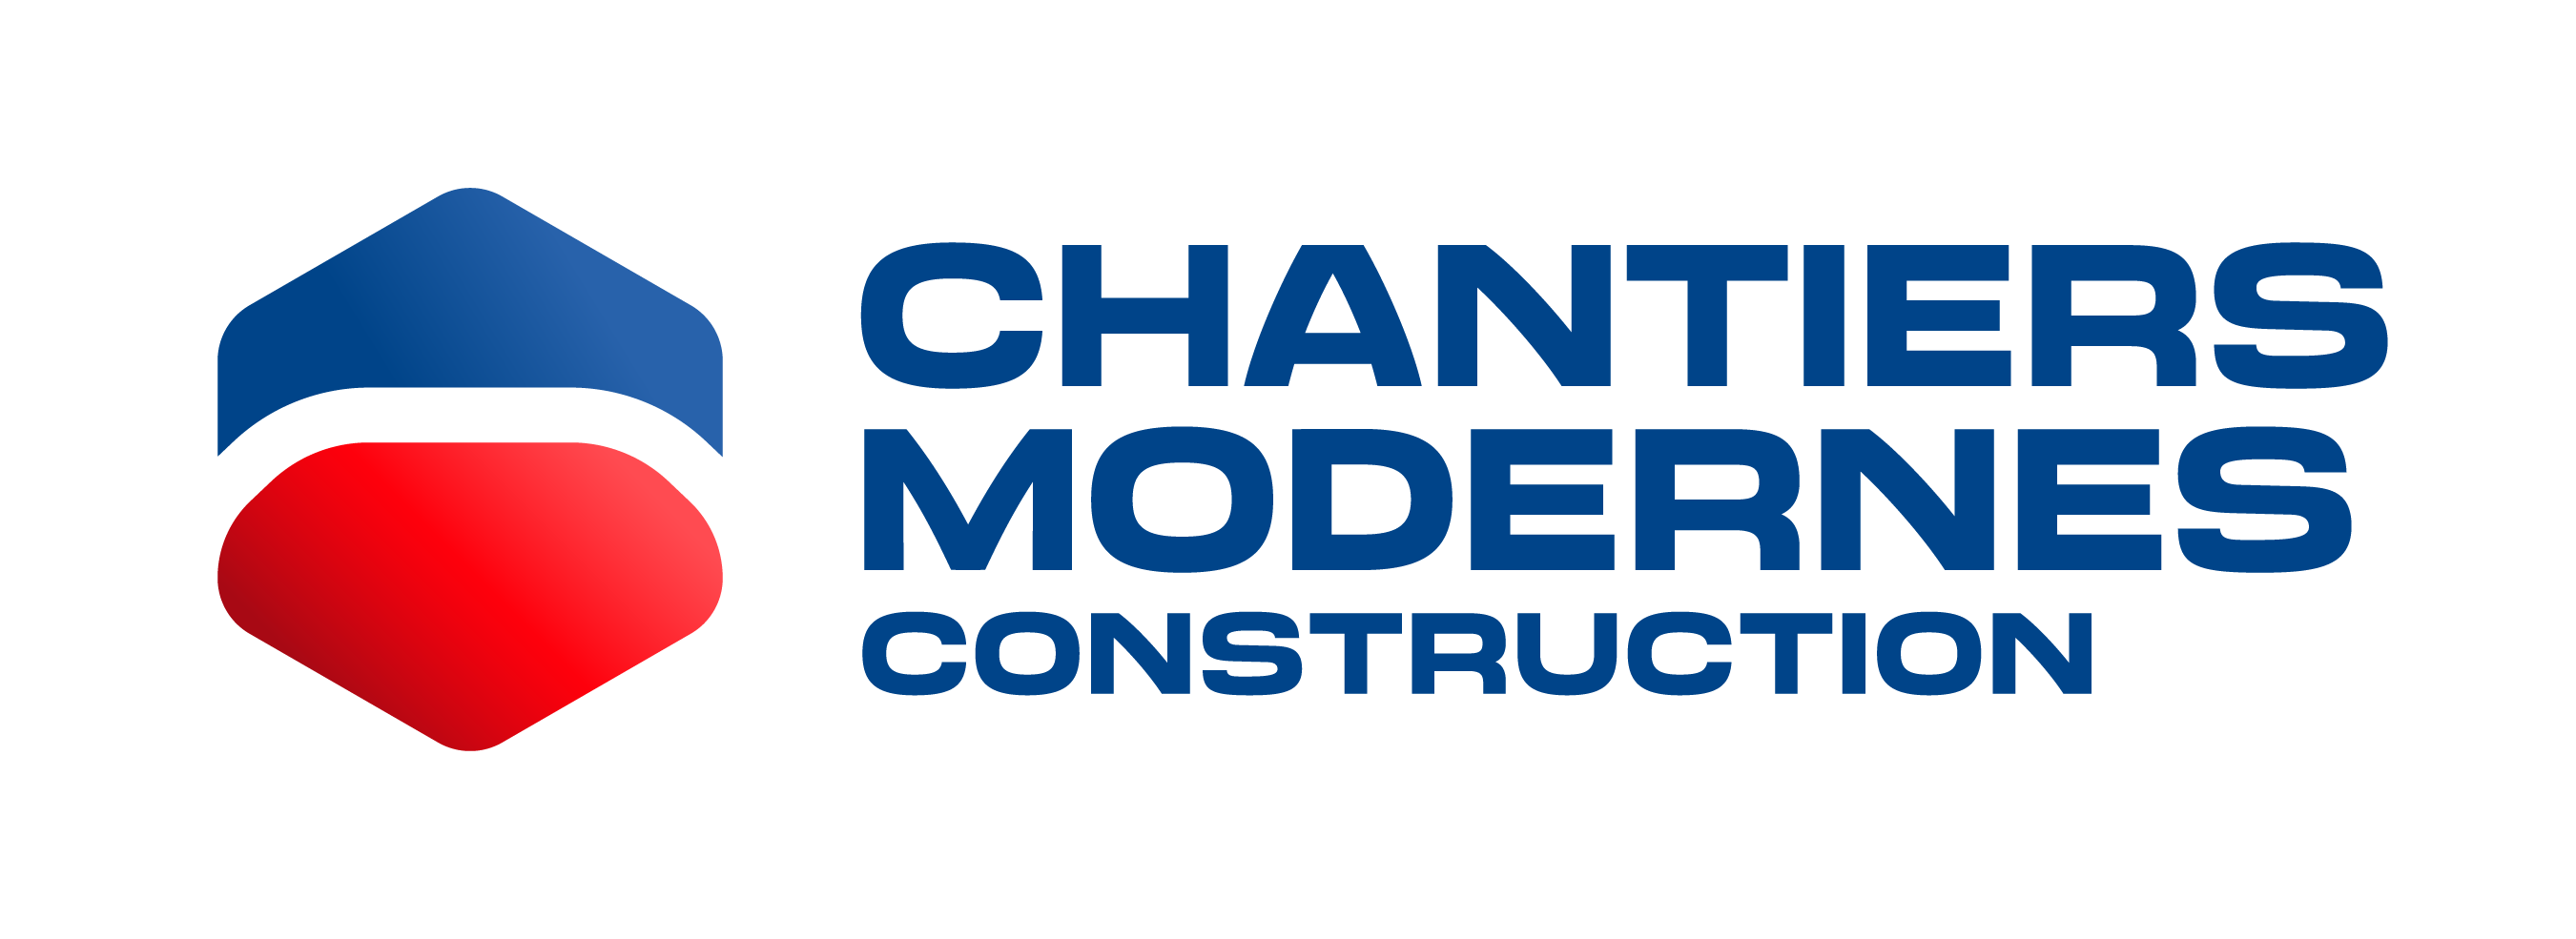 CHANTIERS MODERNES CONSTRUCTION